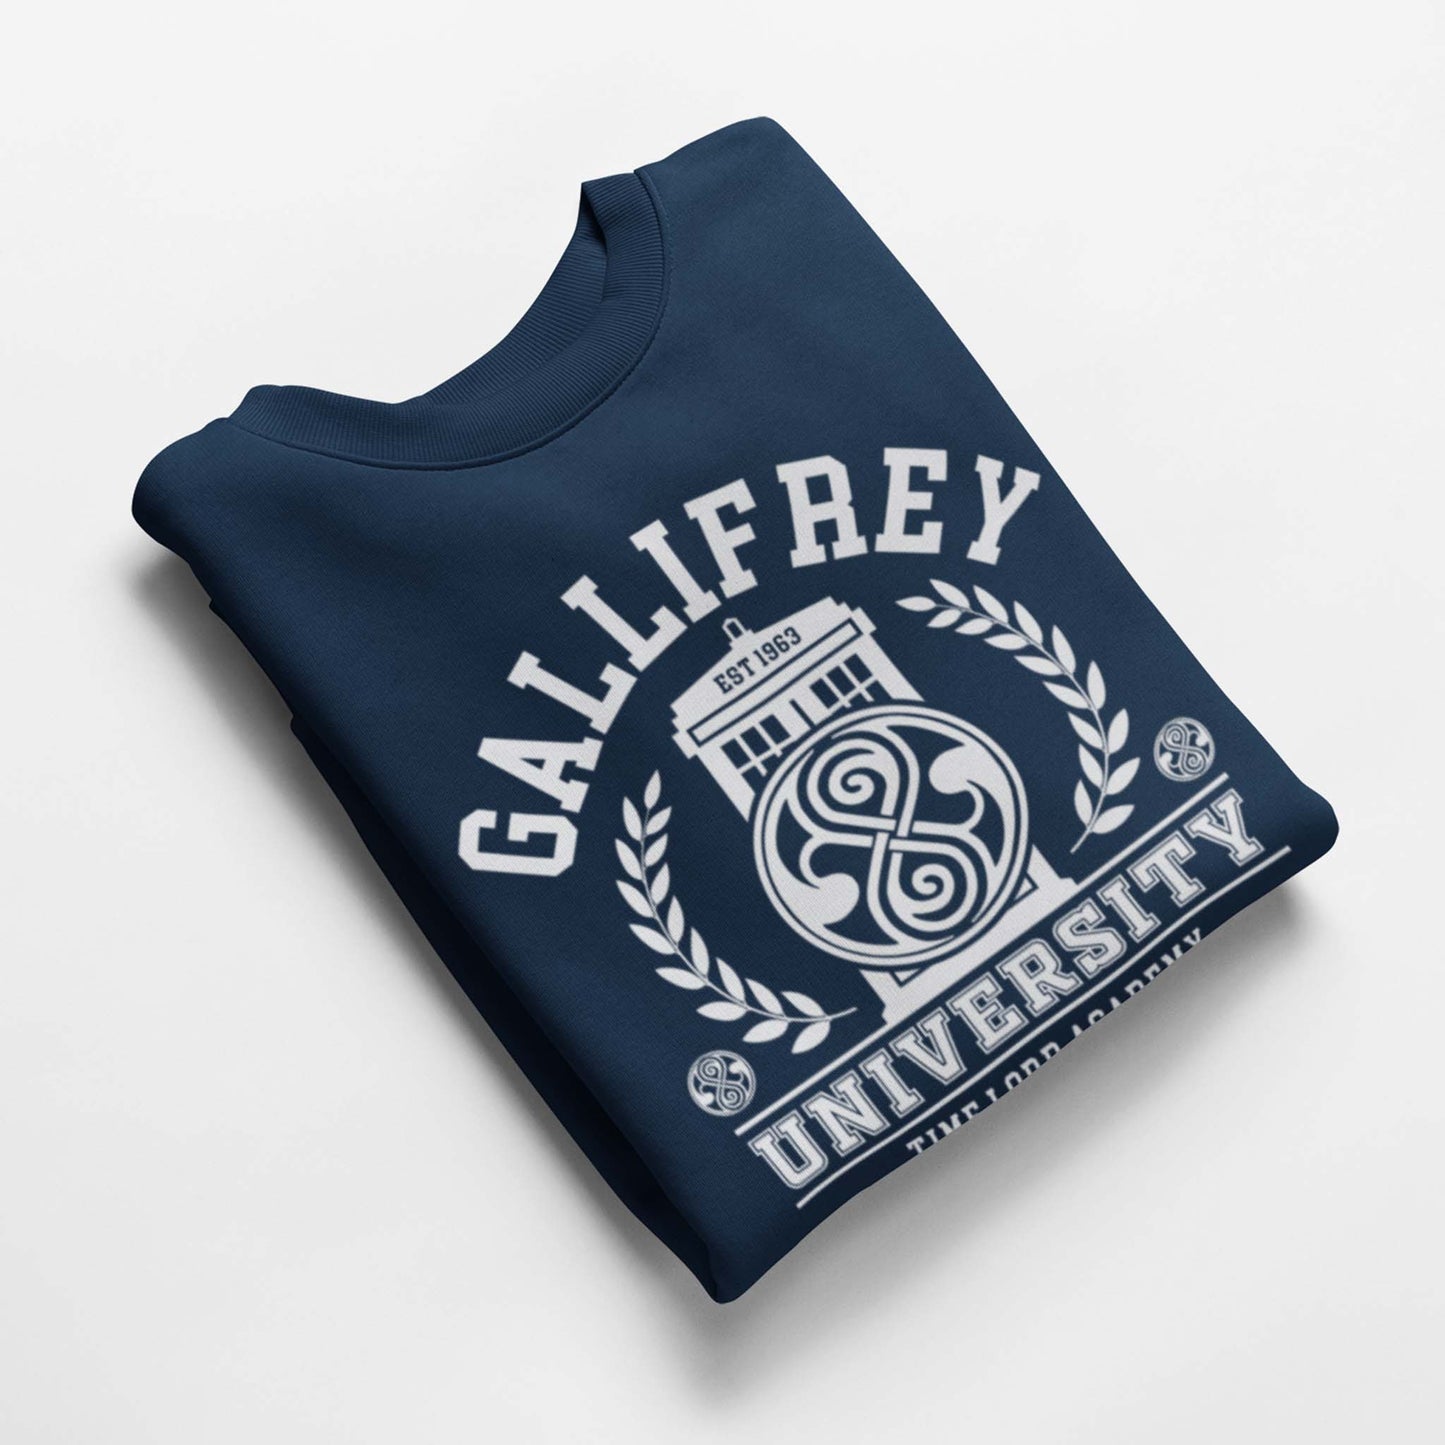 Gallifrey University Unisex Sweatshirt